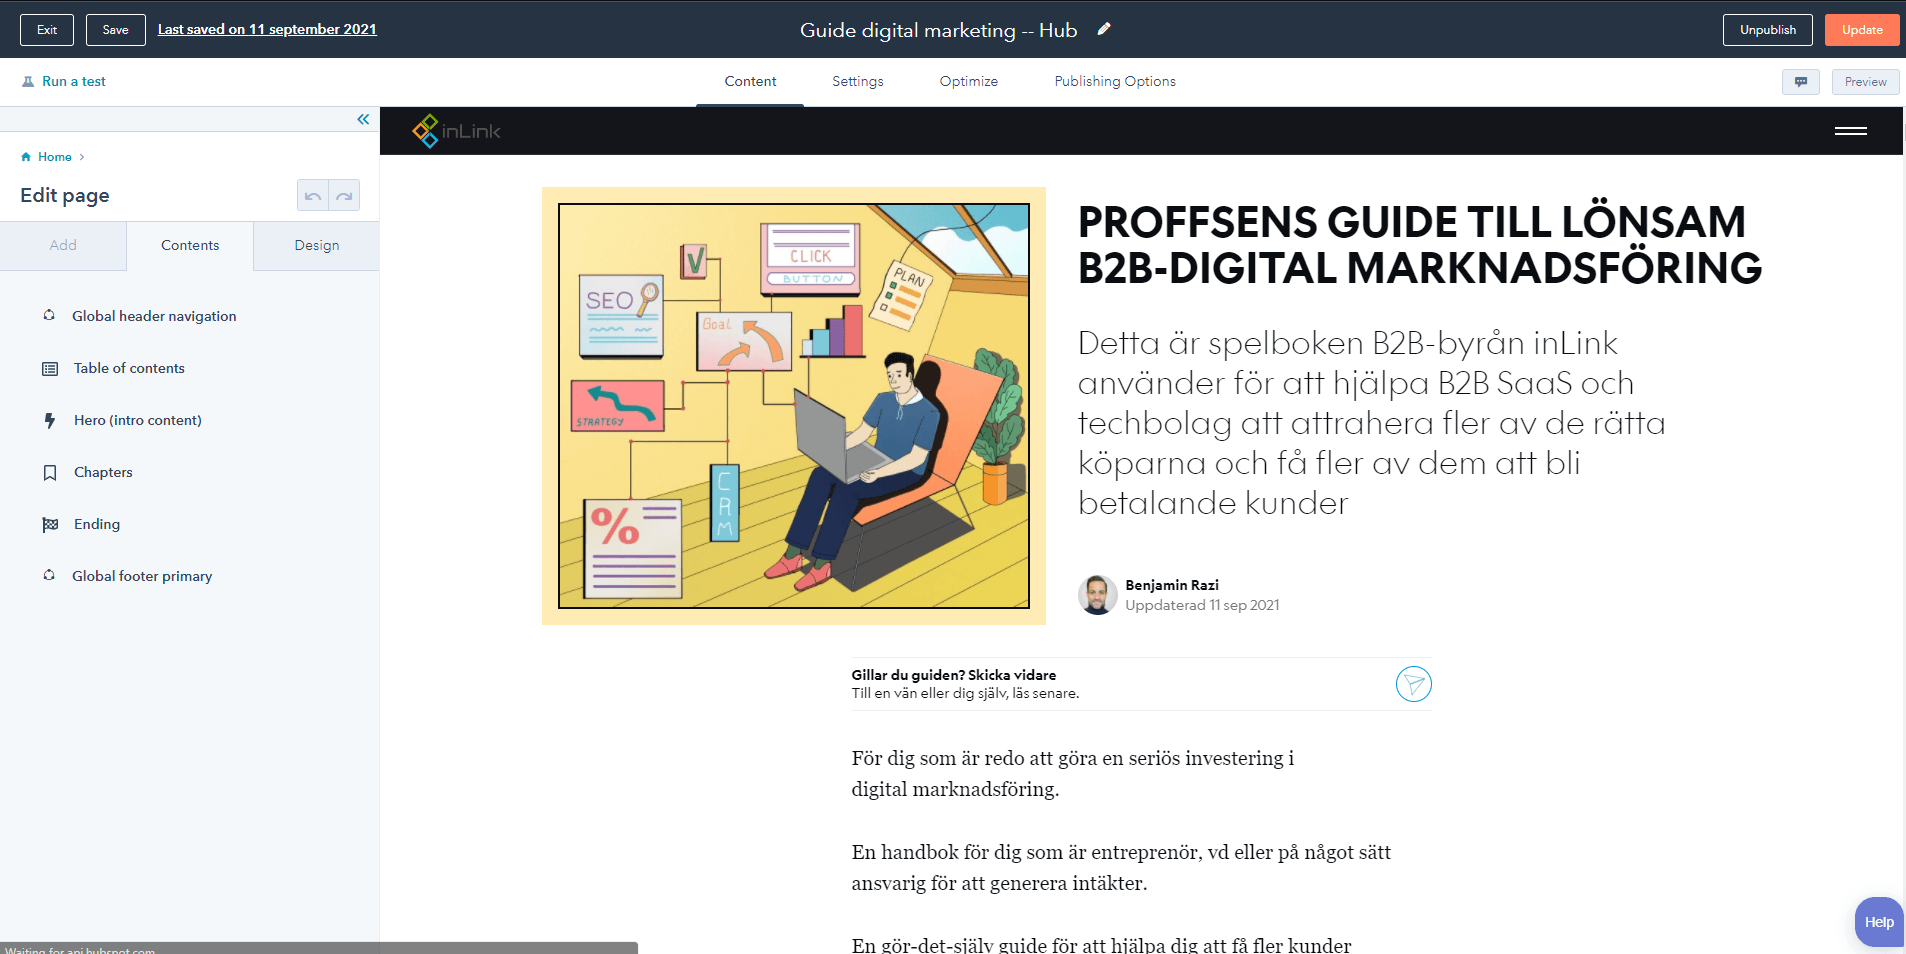 Website -- Guide digital marketing website in HubSpot